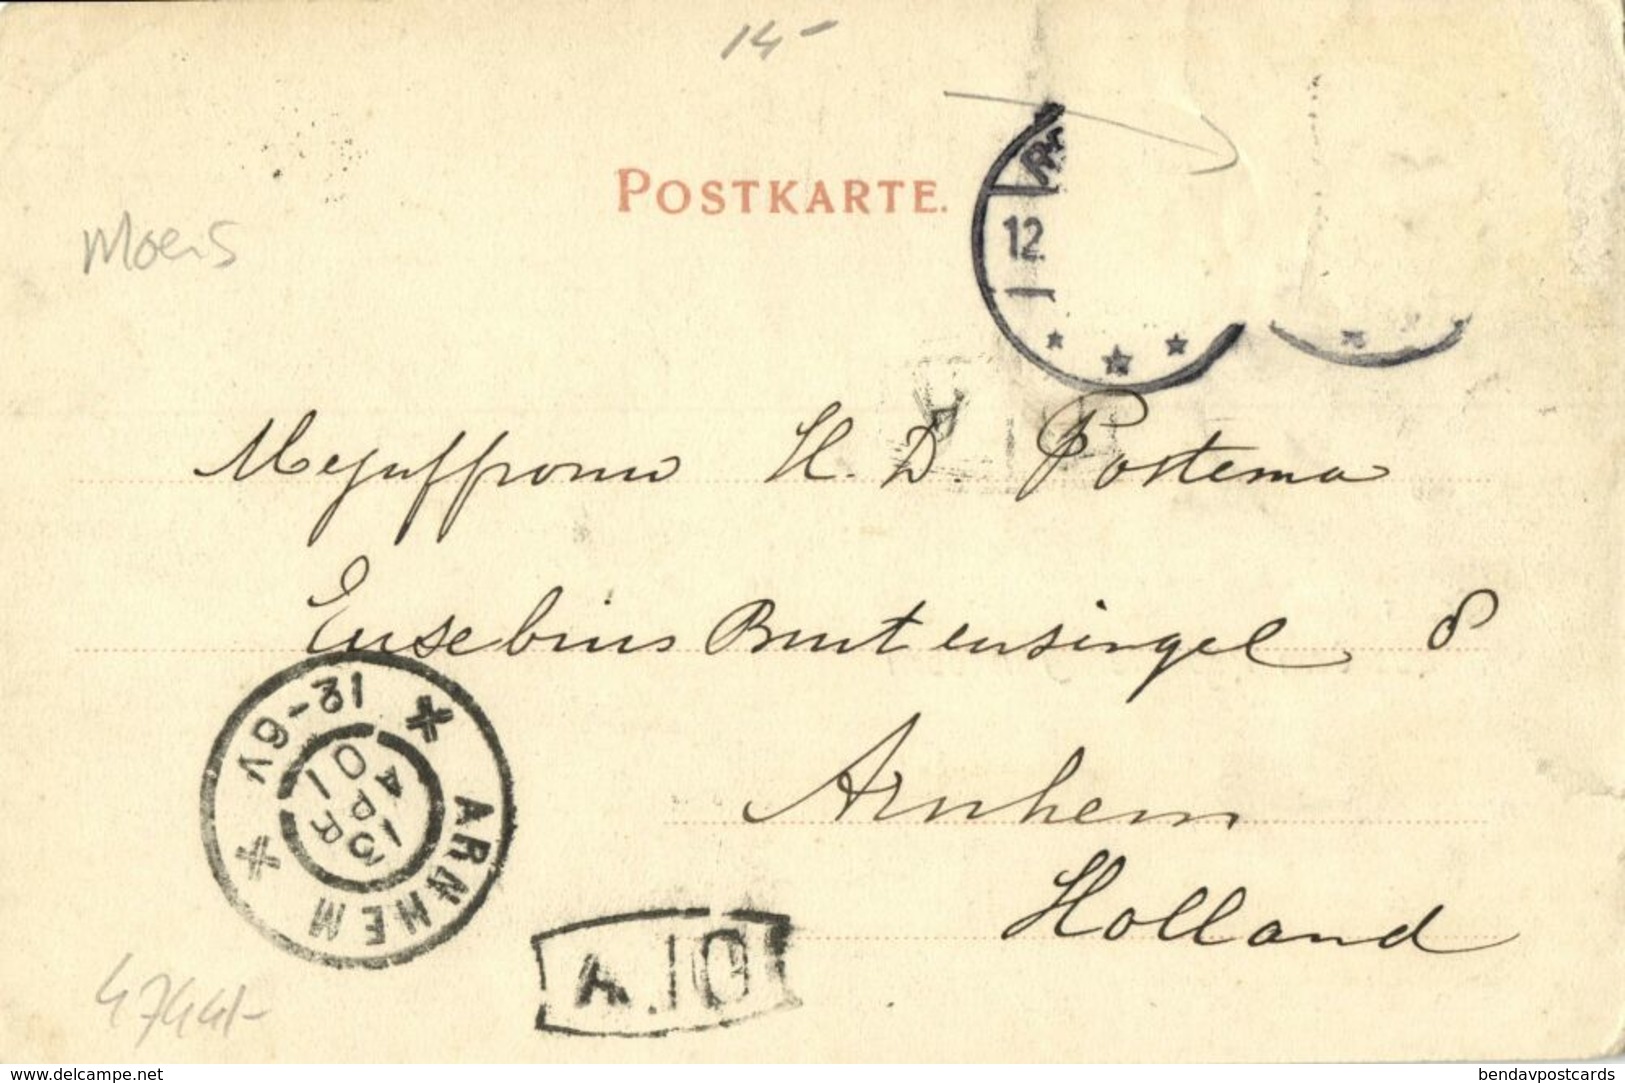 REPELEN, Herrenpark, Repelner Meer, Jungborn (1901) AK - Moers